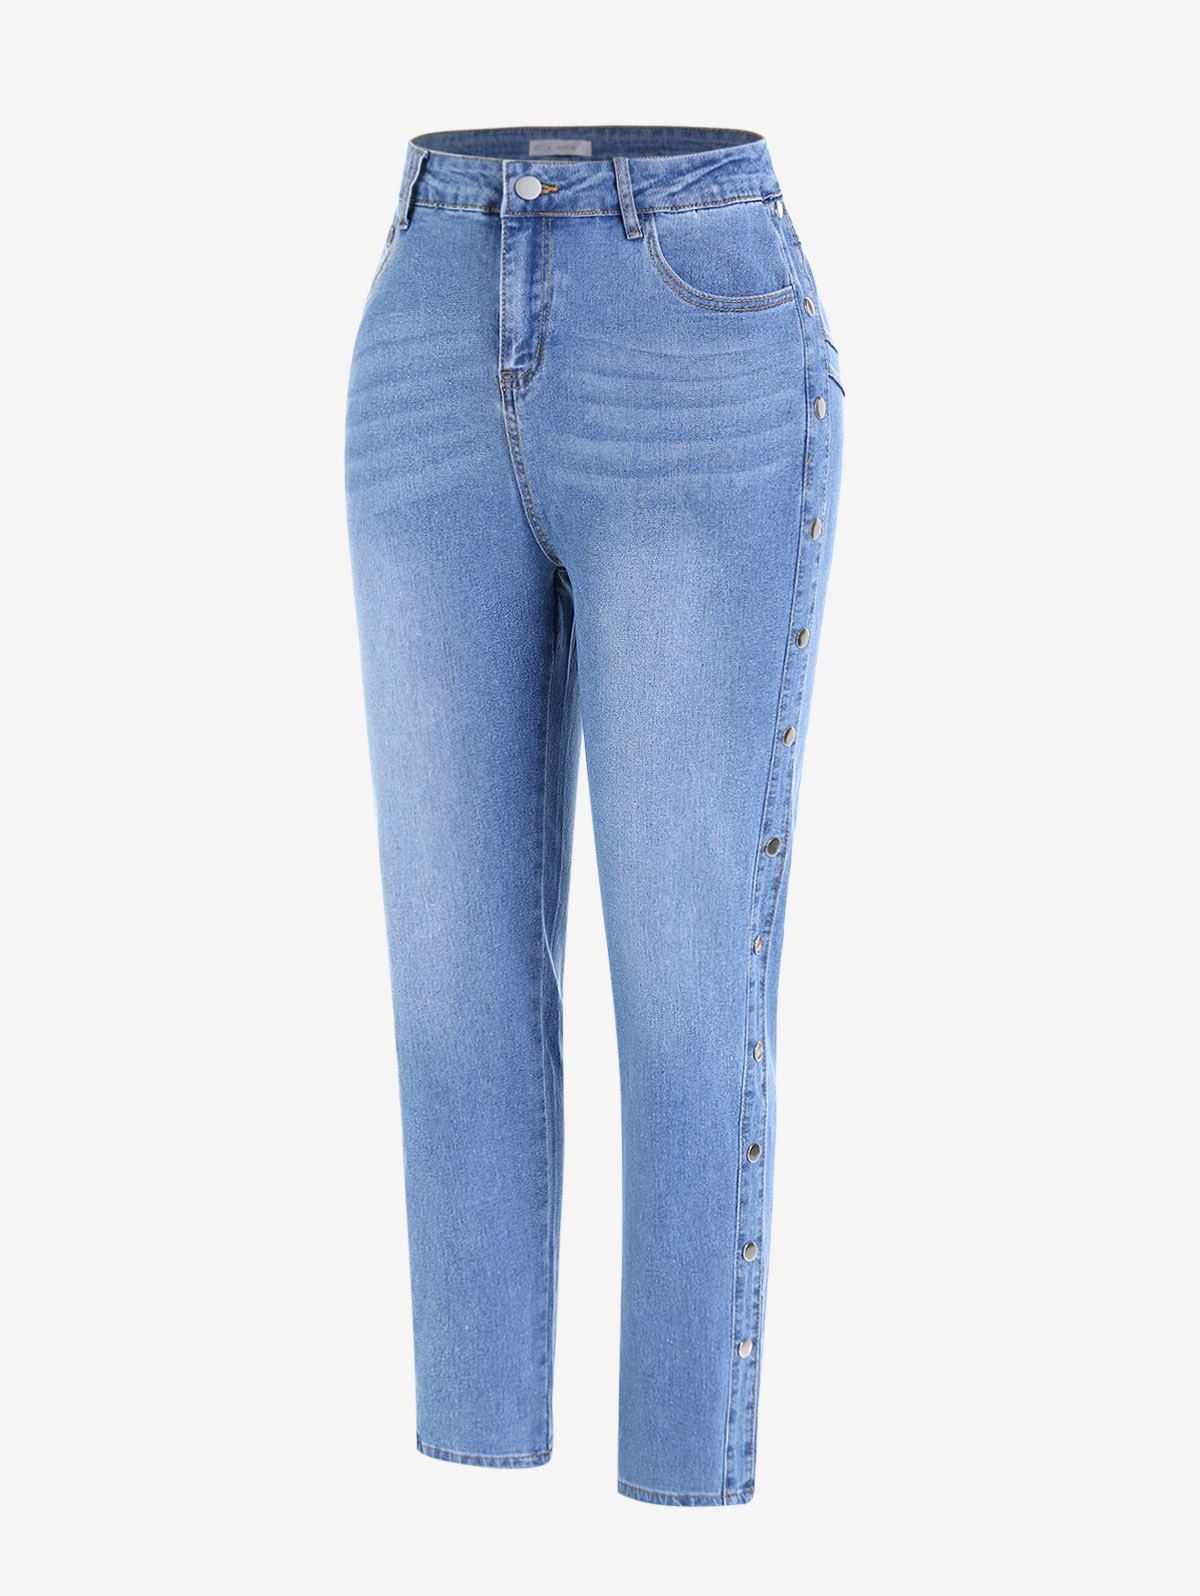 Plus Size Studded Light Wash Skinny Jeans - BLUE 1X